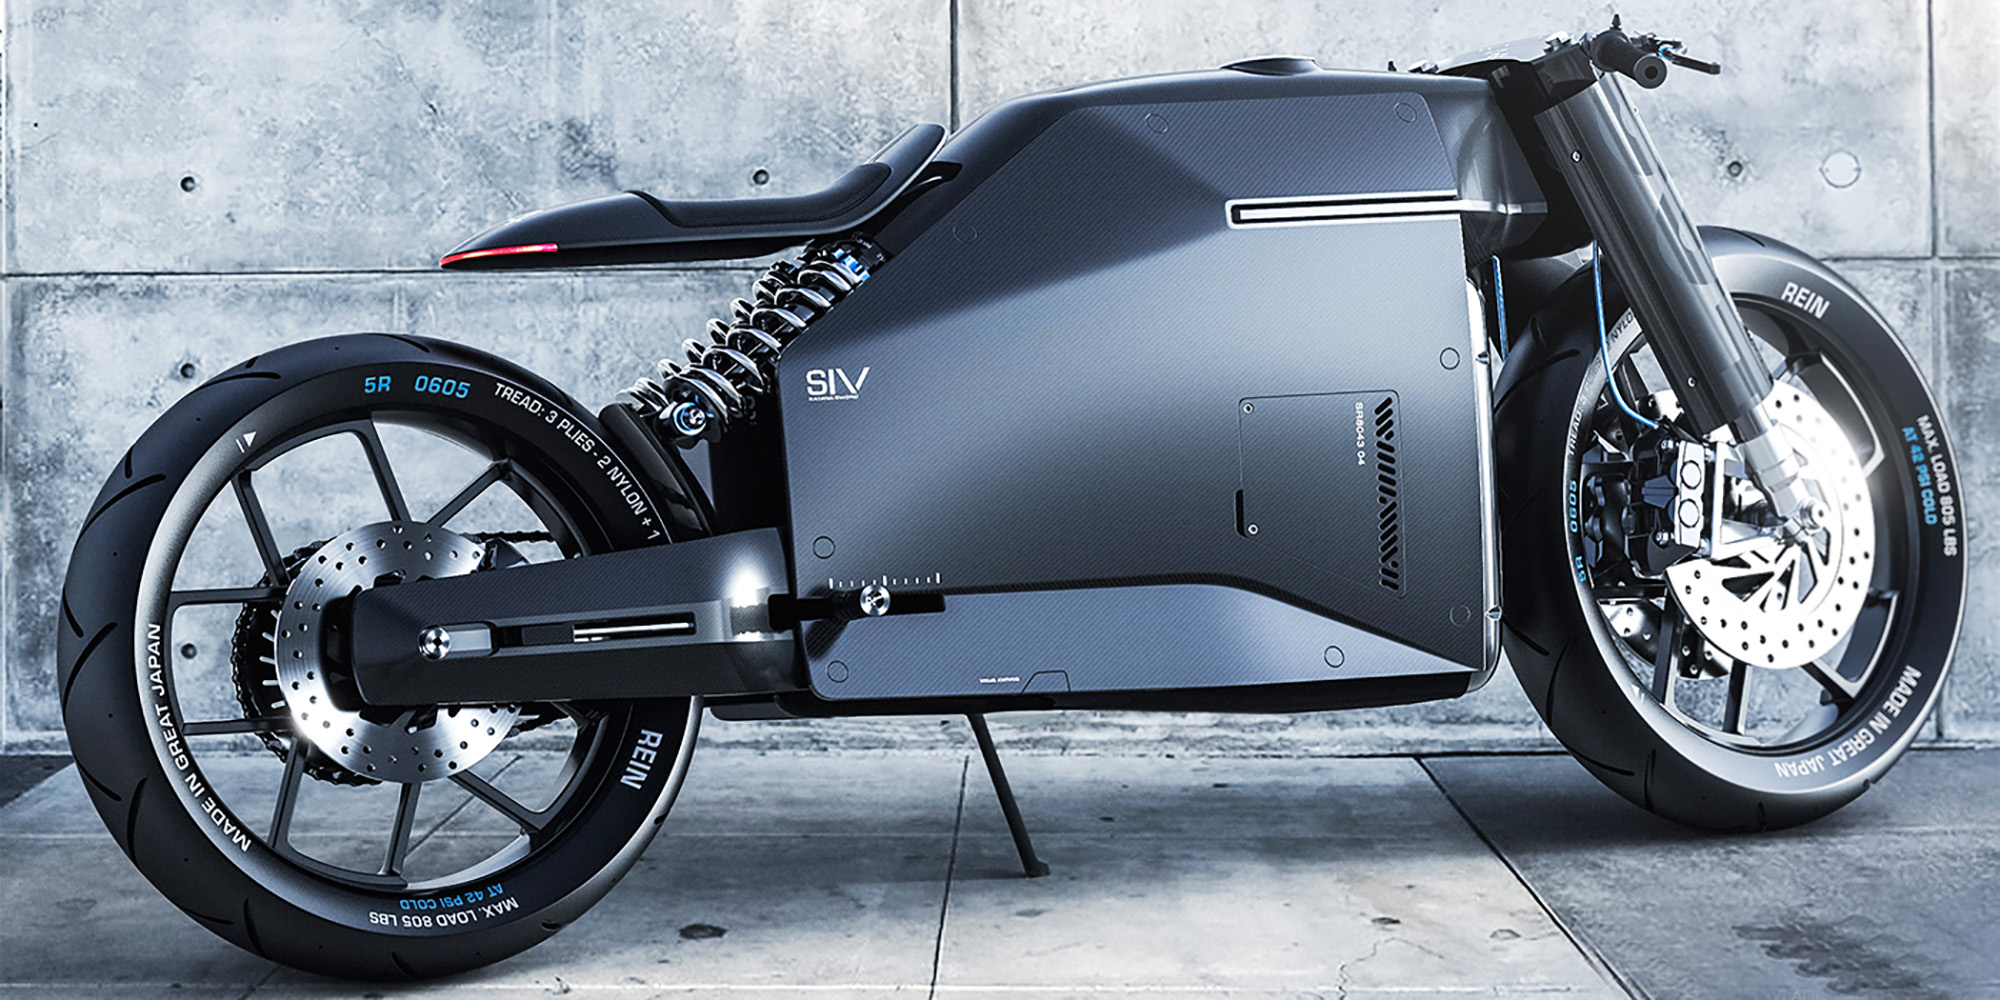 samurai carbon fiber motorcycle concept great japan